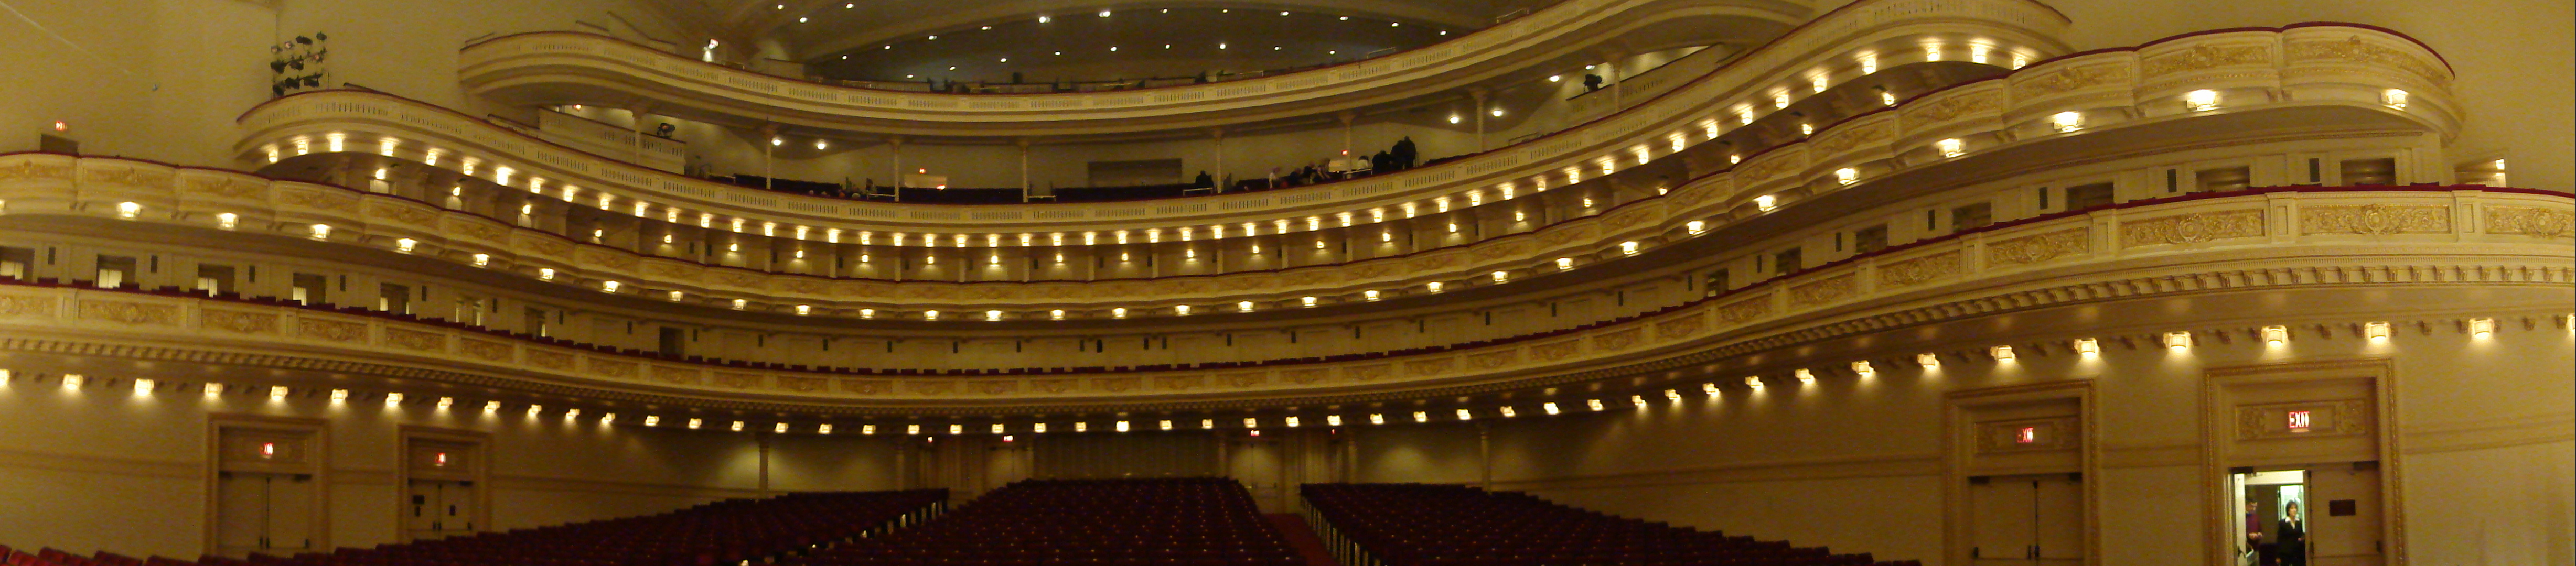 Isaac Stern Auditorium/Ronald O. Perelman Stage 